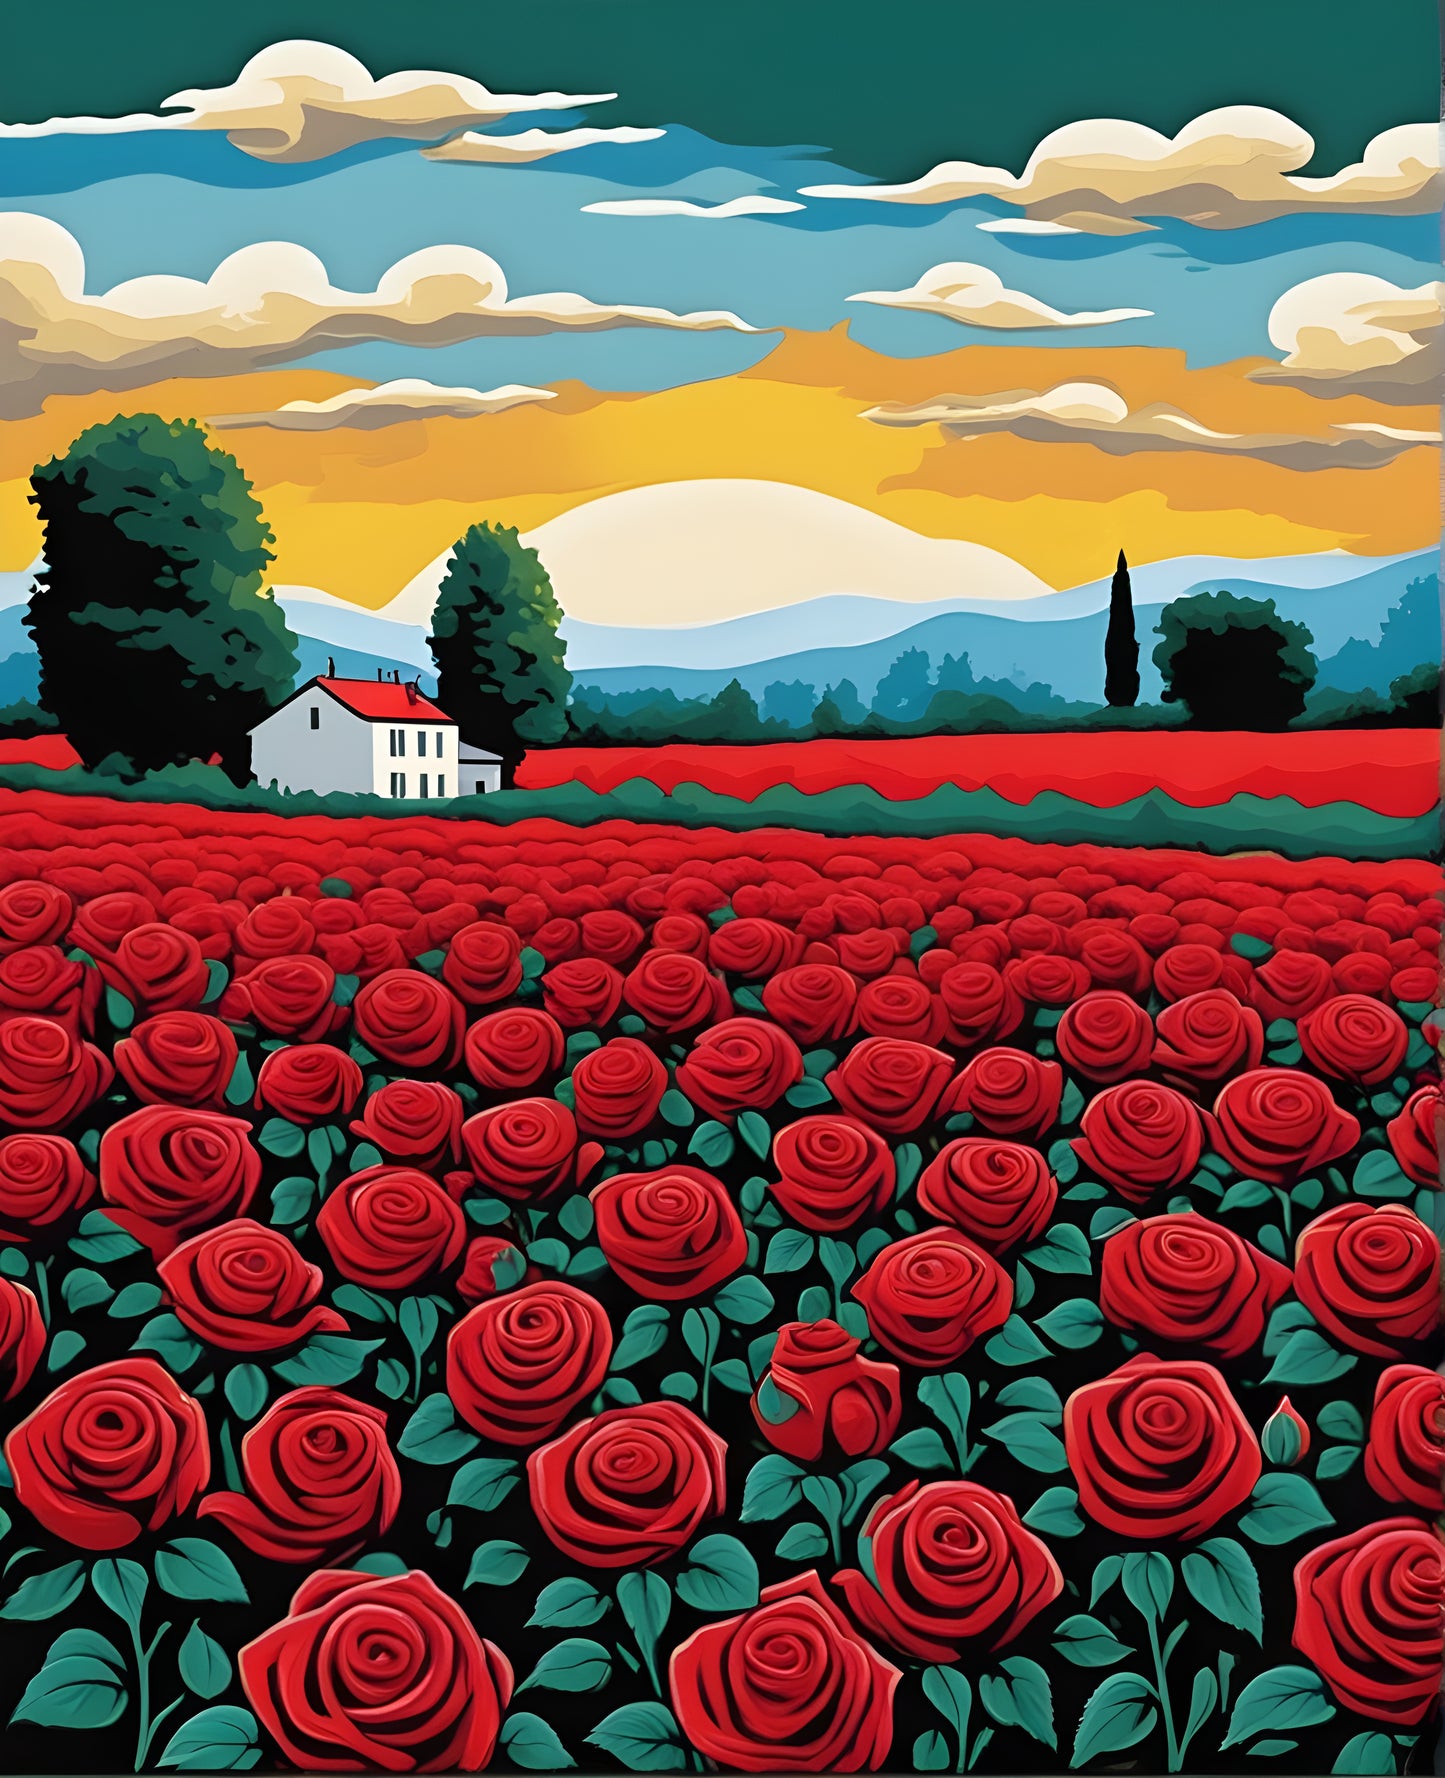 Red Roses Field (3) - Van-Go Paint-By-Number Kit